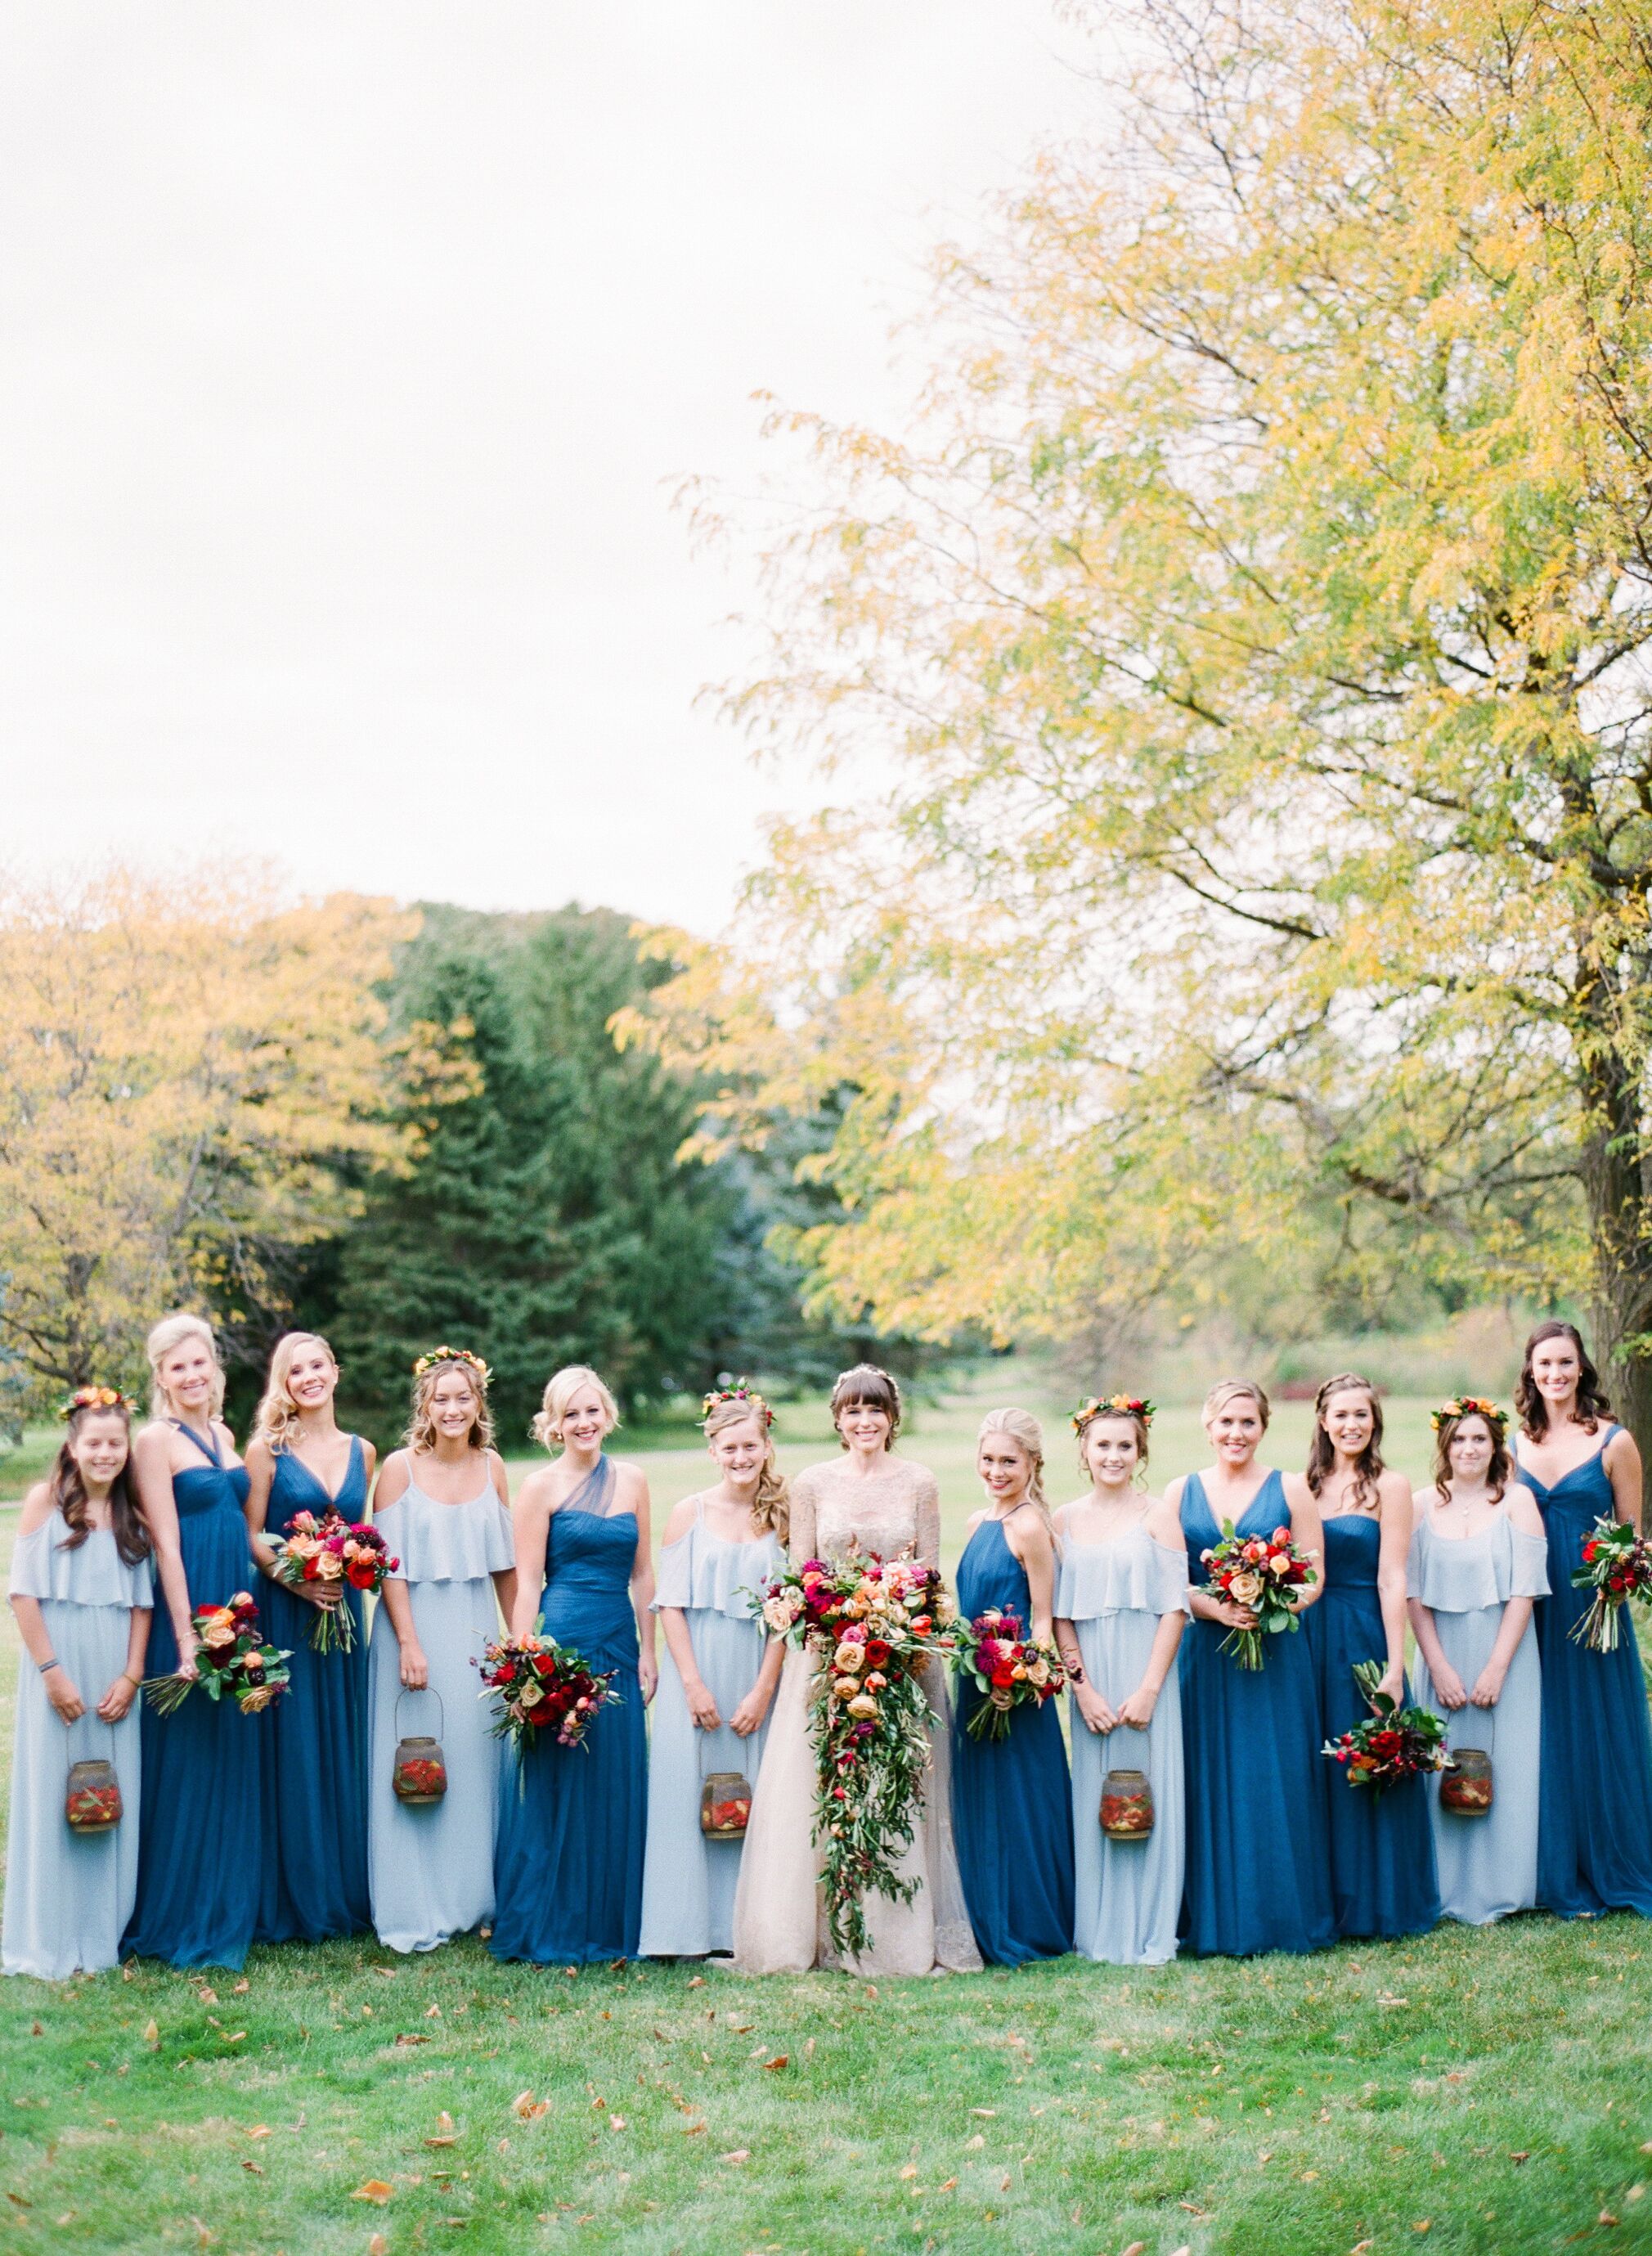 Shades of Blue Bridesmaid Dresses